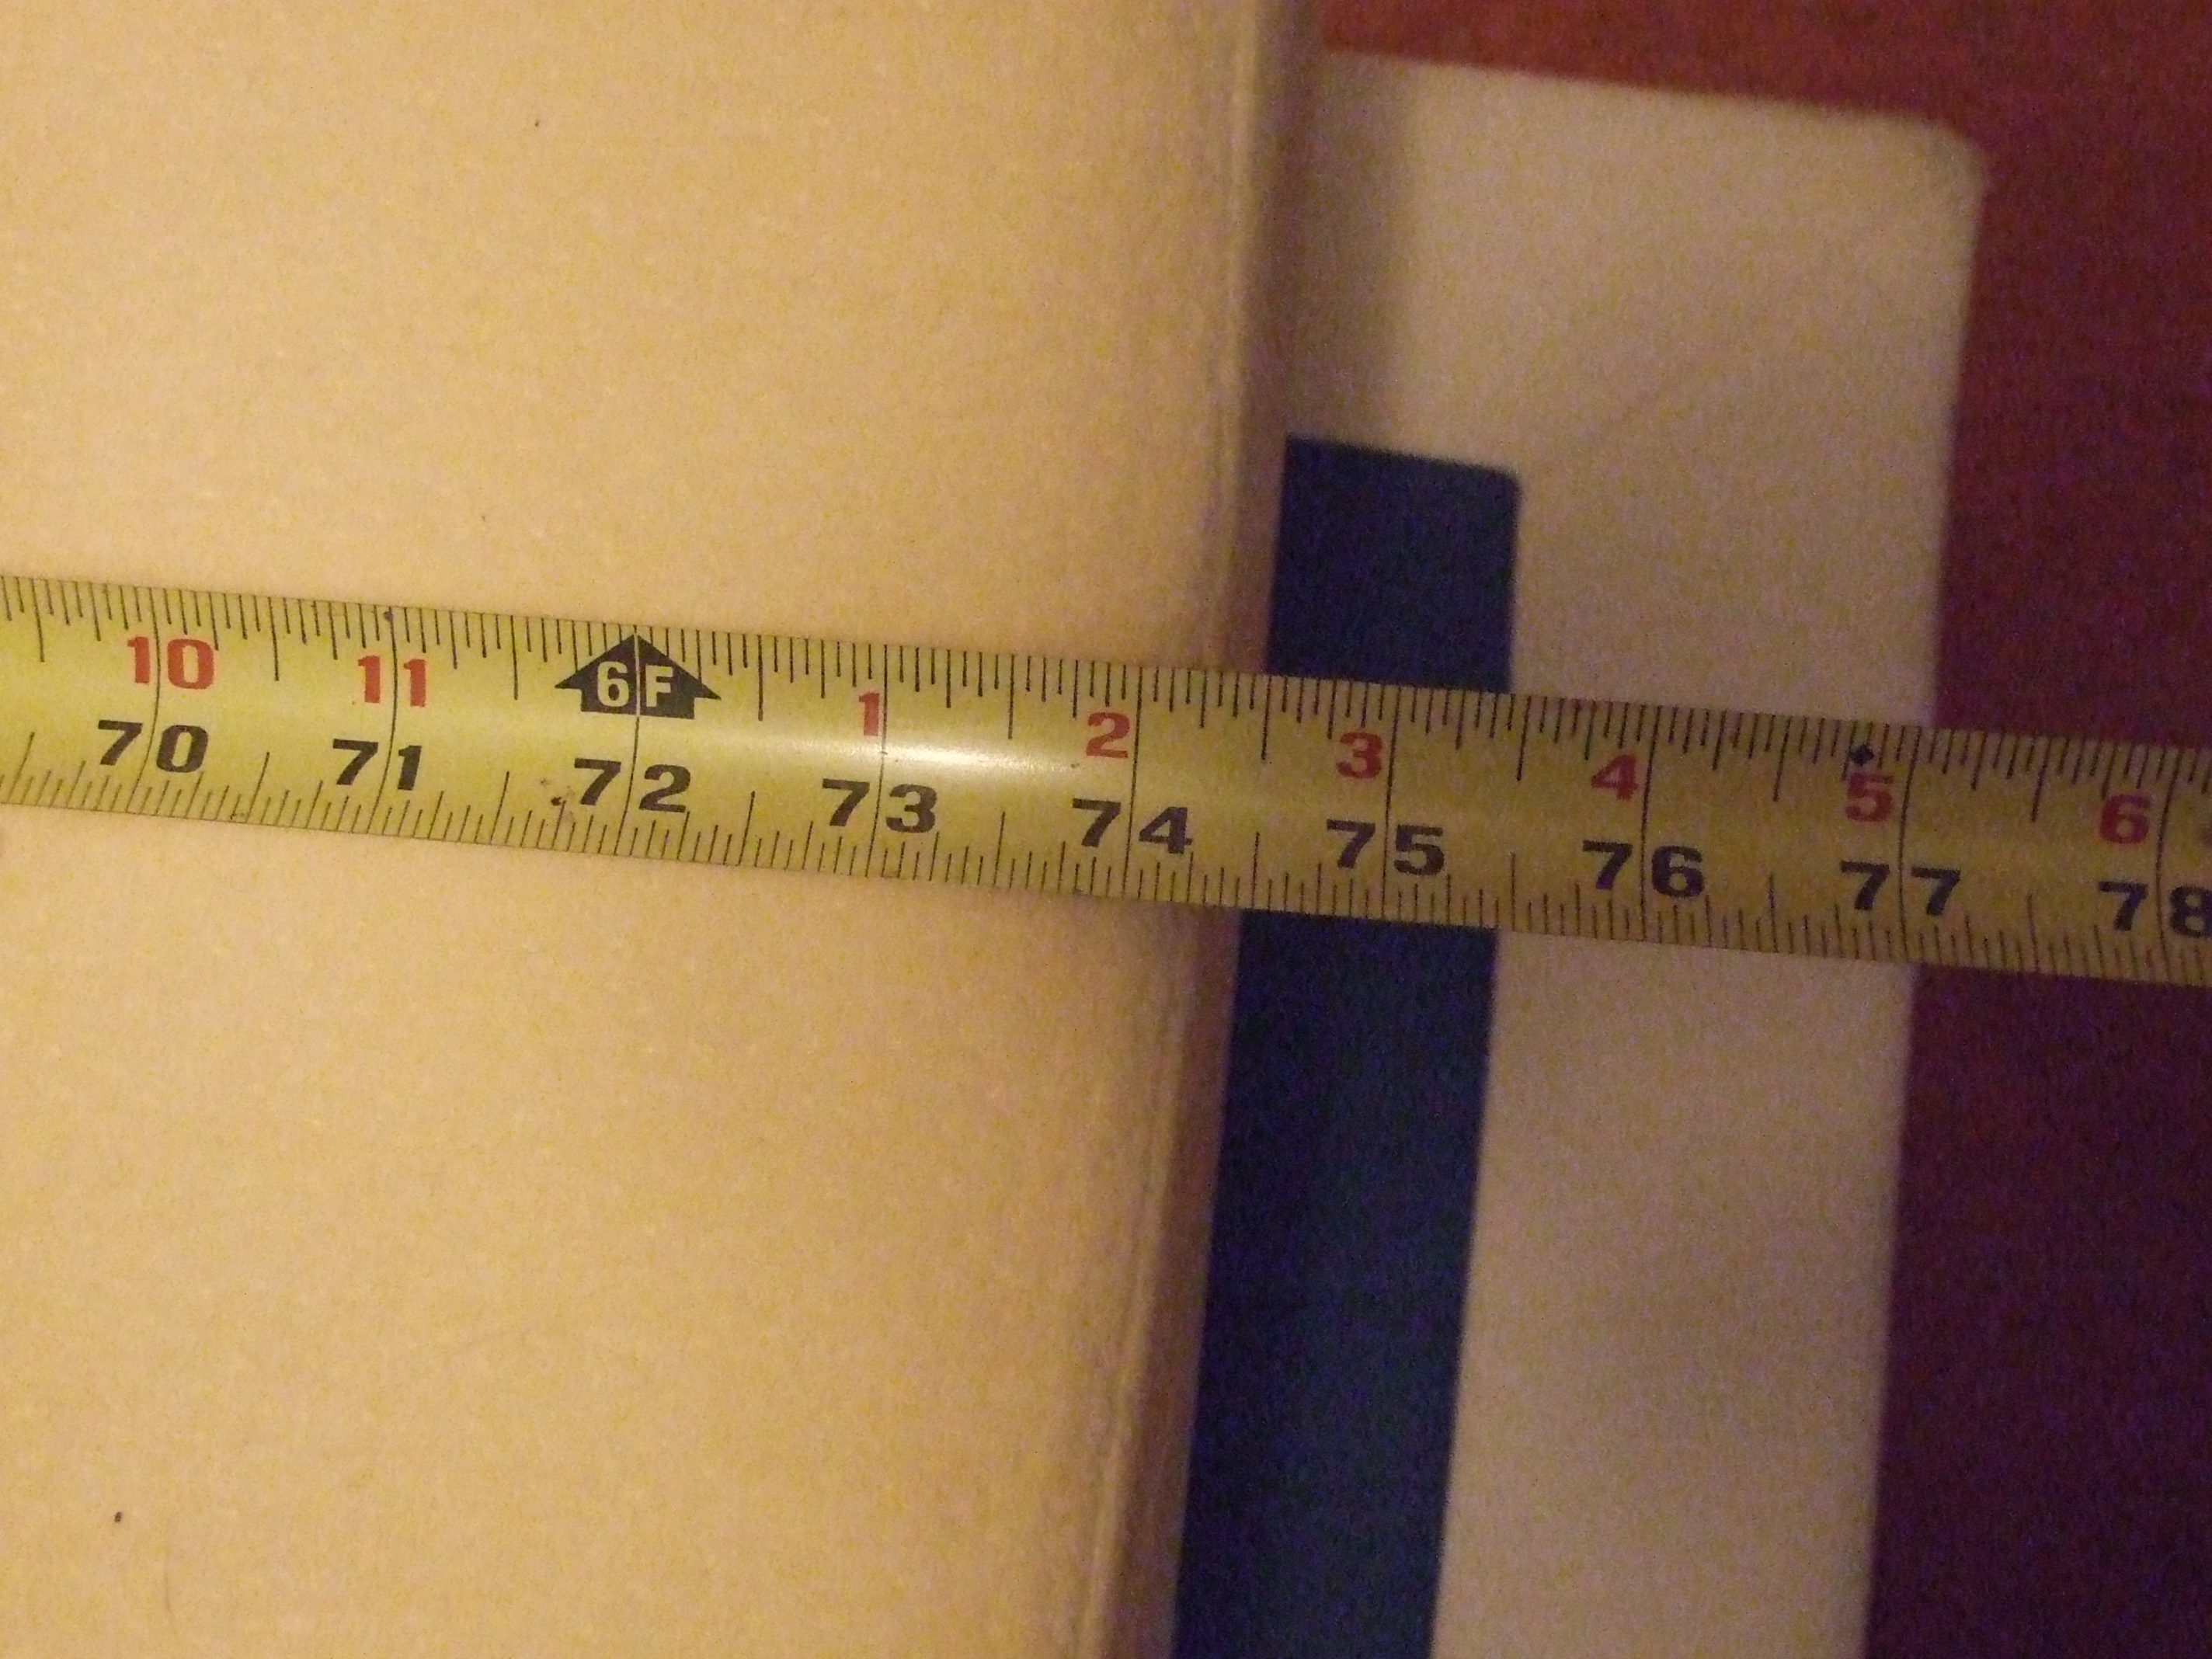 Shows actual length of mattress